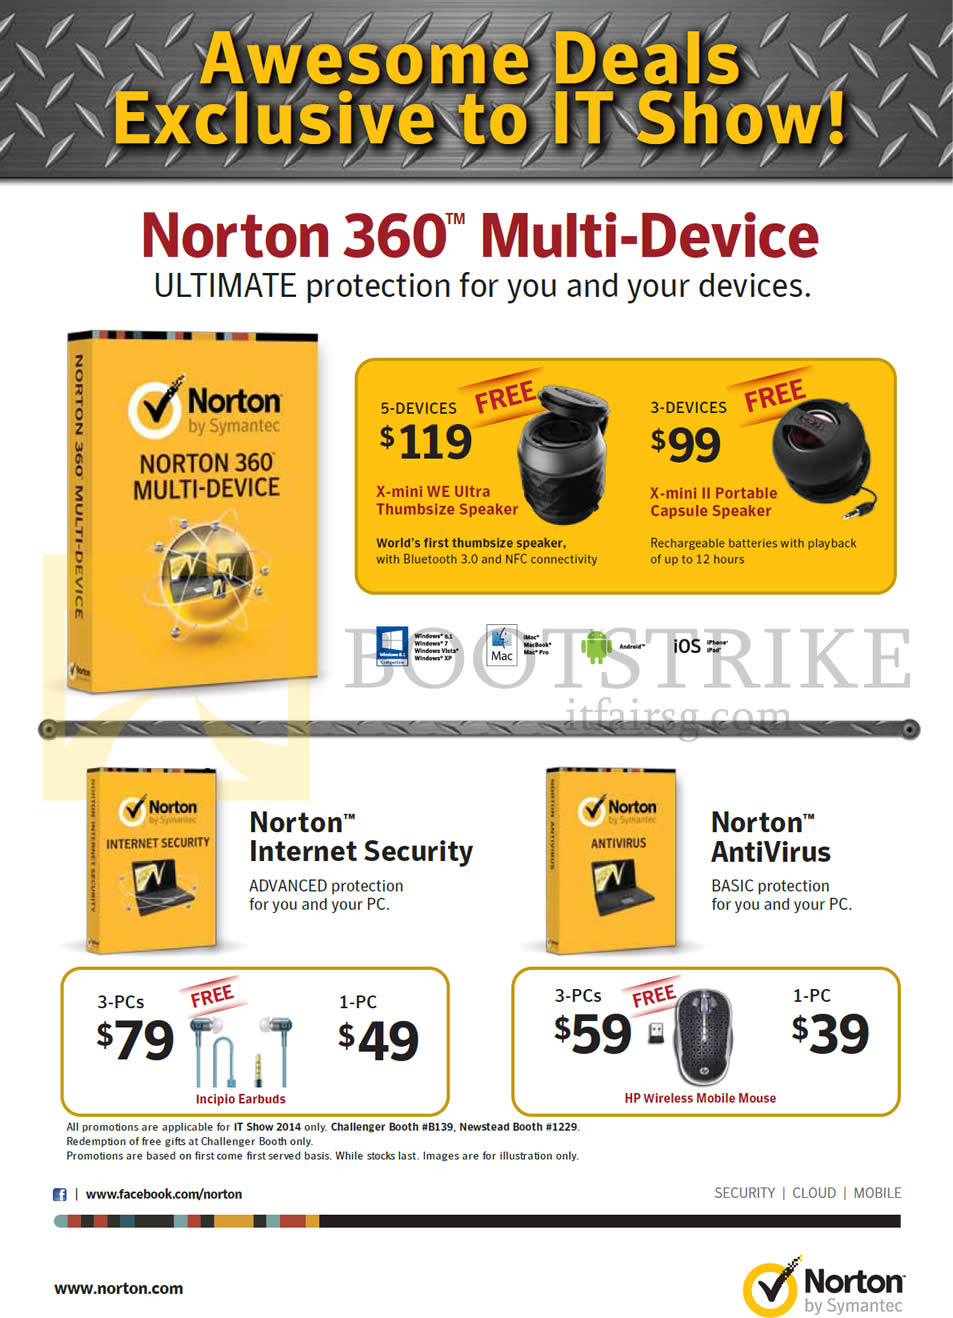 IT SHOW 2014 price list image brochure of Norton Security Software 360 Multi-Device, Internet Security, AntiVirus